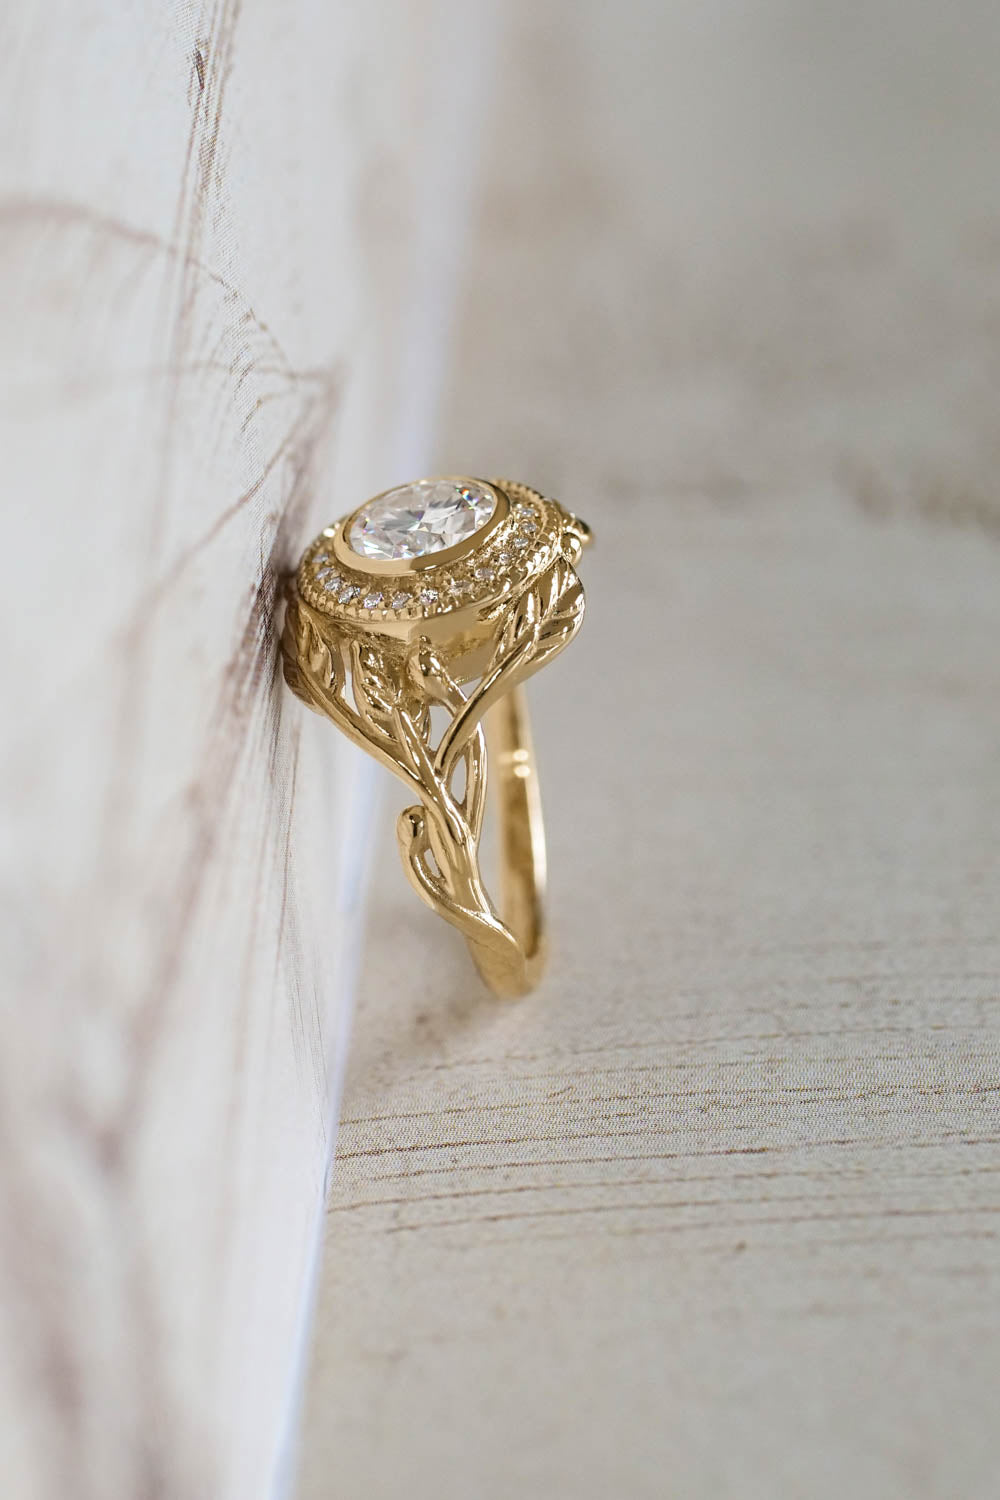 Halo engagement ring with moissanite / Tilia - Eden Garden Jewelry™